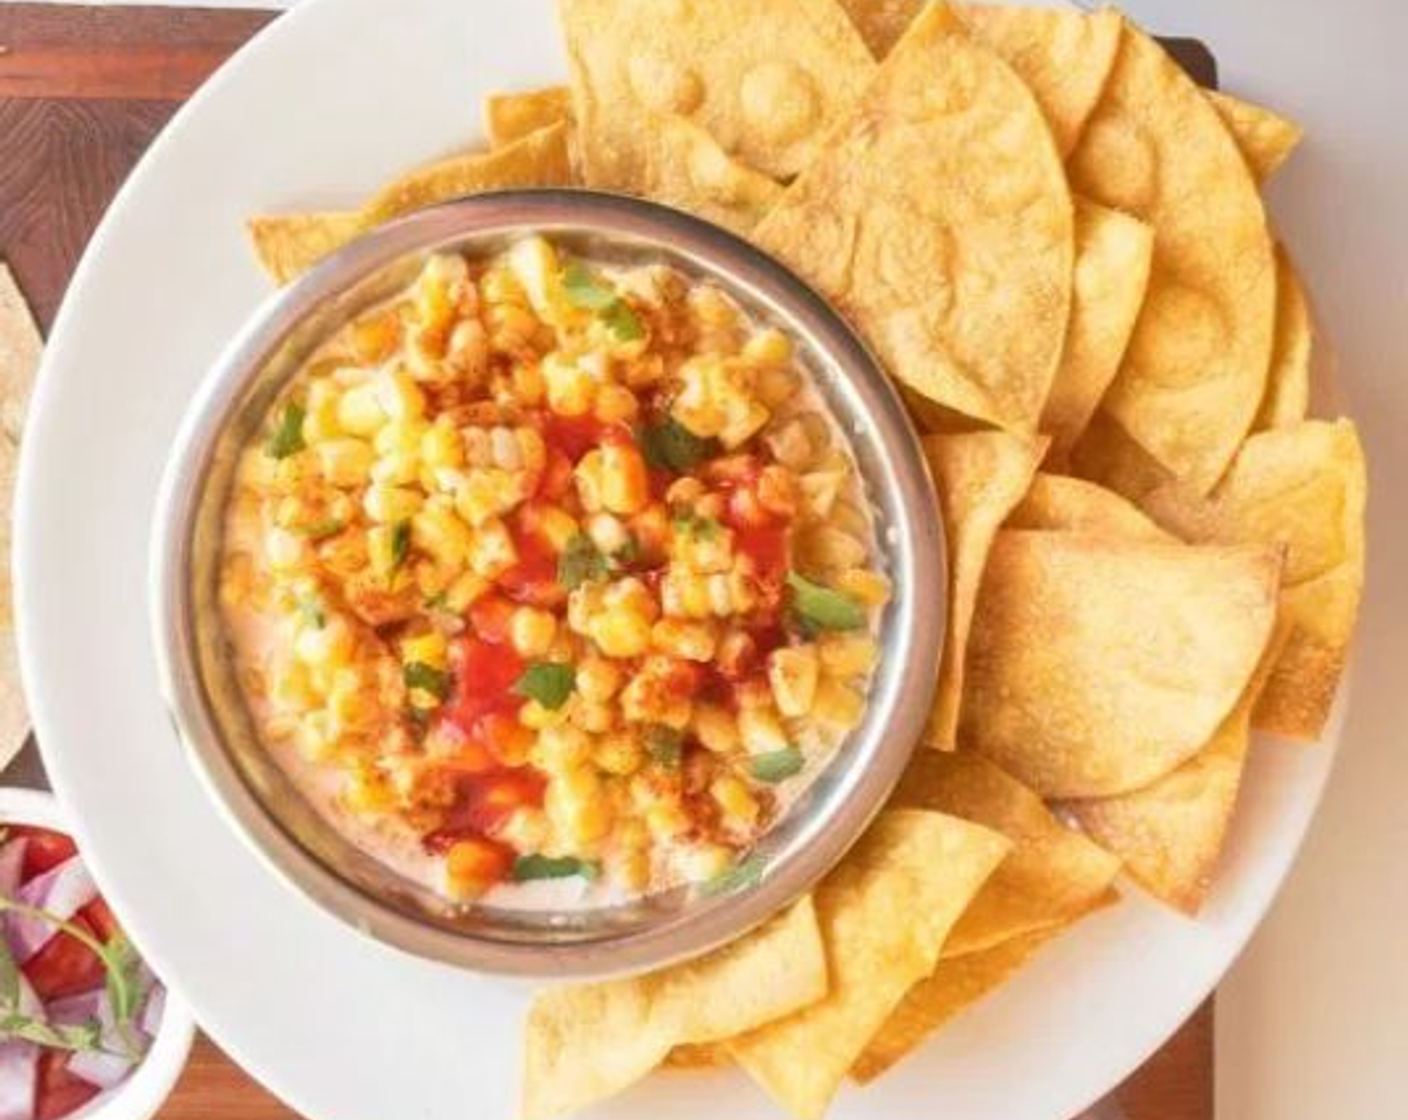 Vegan Sriracha Mexican Street Corn Dip with Home Baked Tortilla Chips